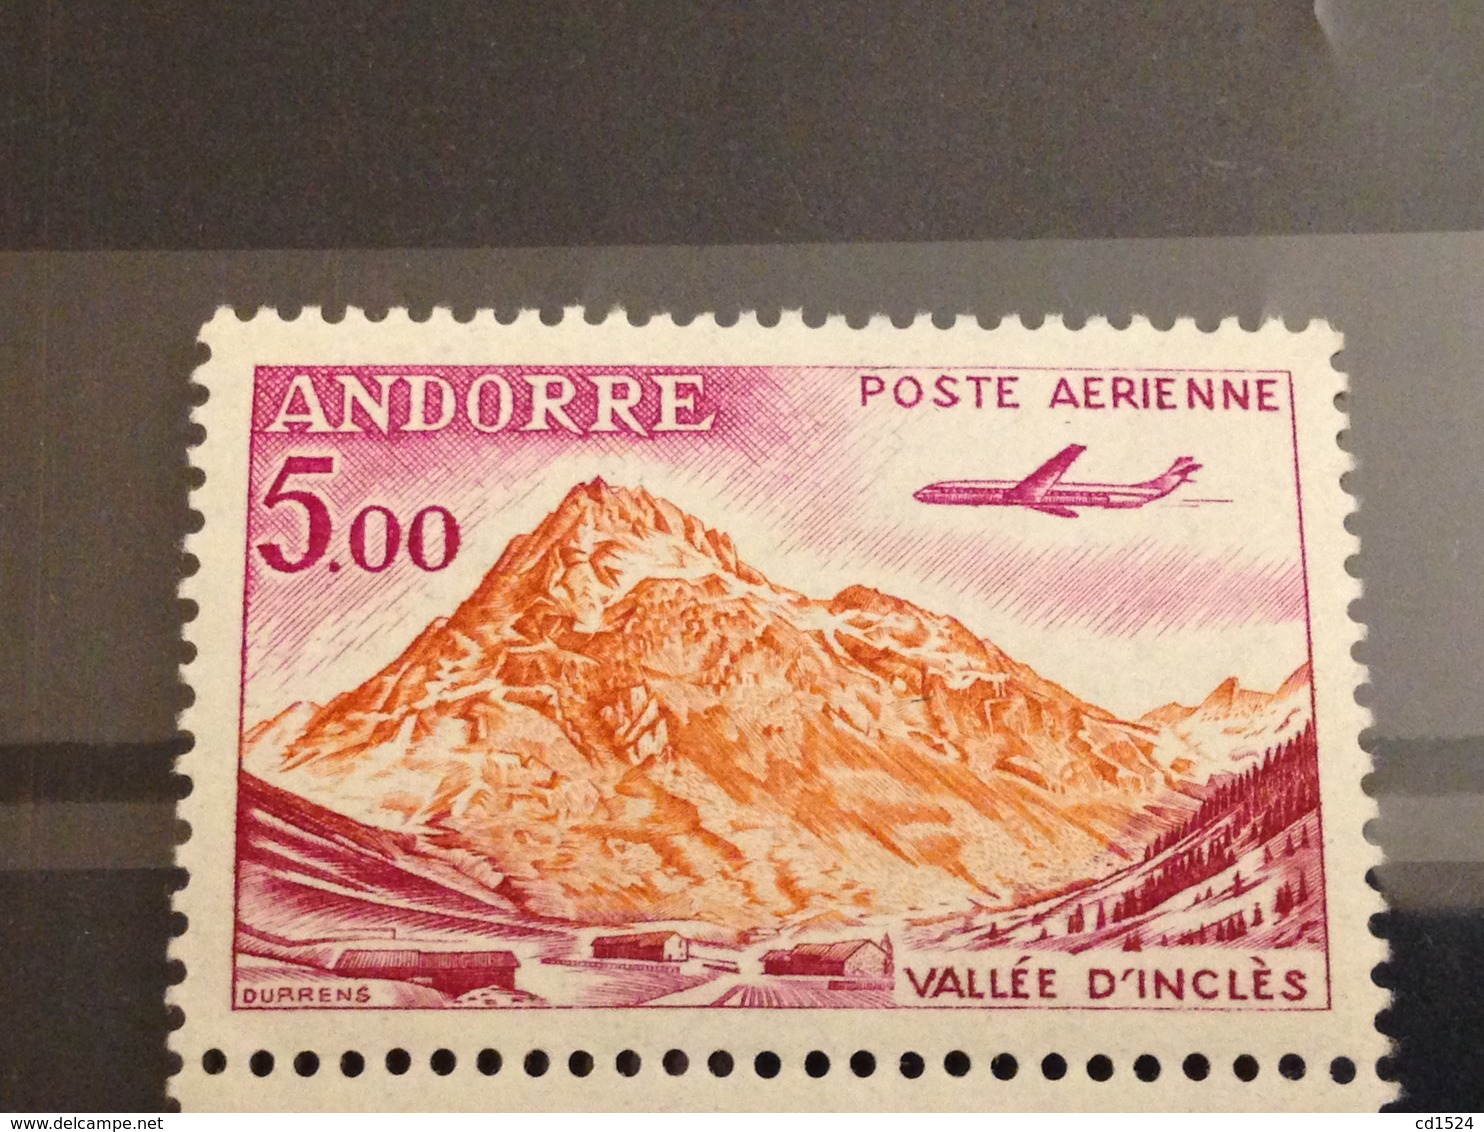 ANDORRE FRANCAIS - Neuf** - Poste Aérienne - 1961 - Luchtpost